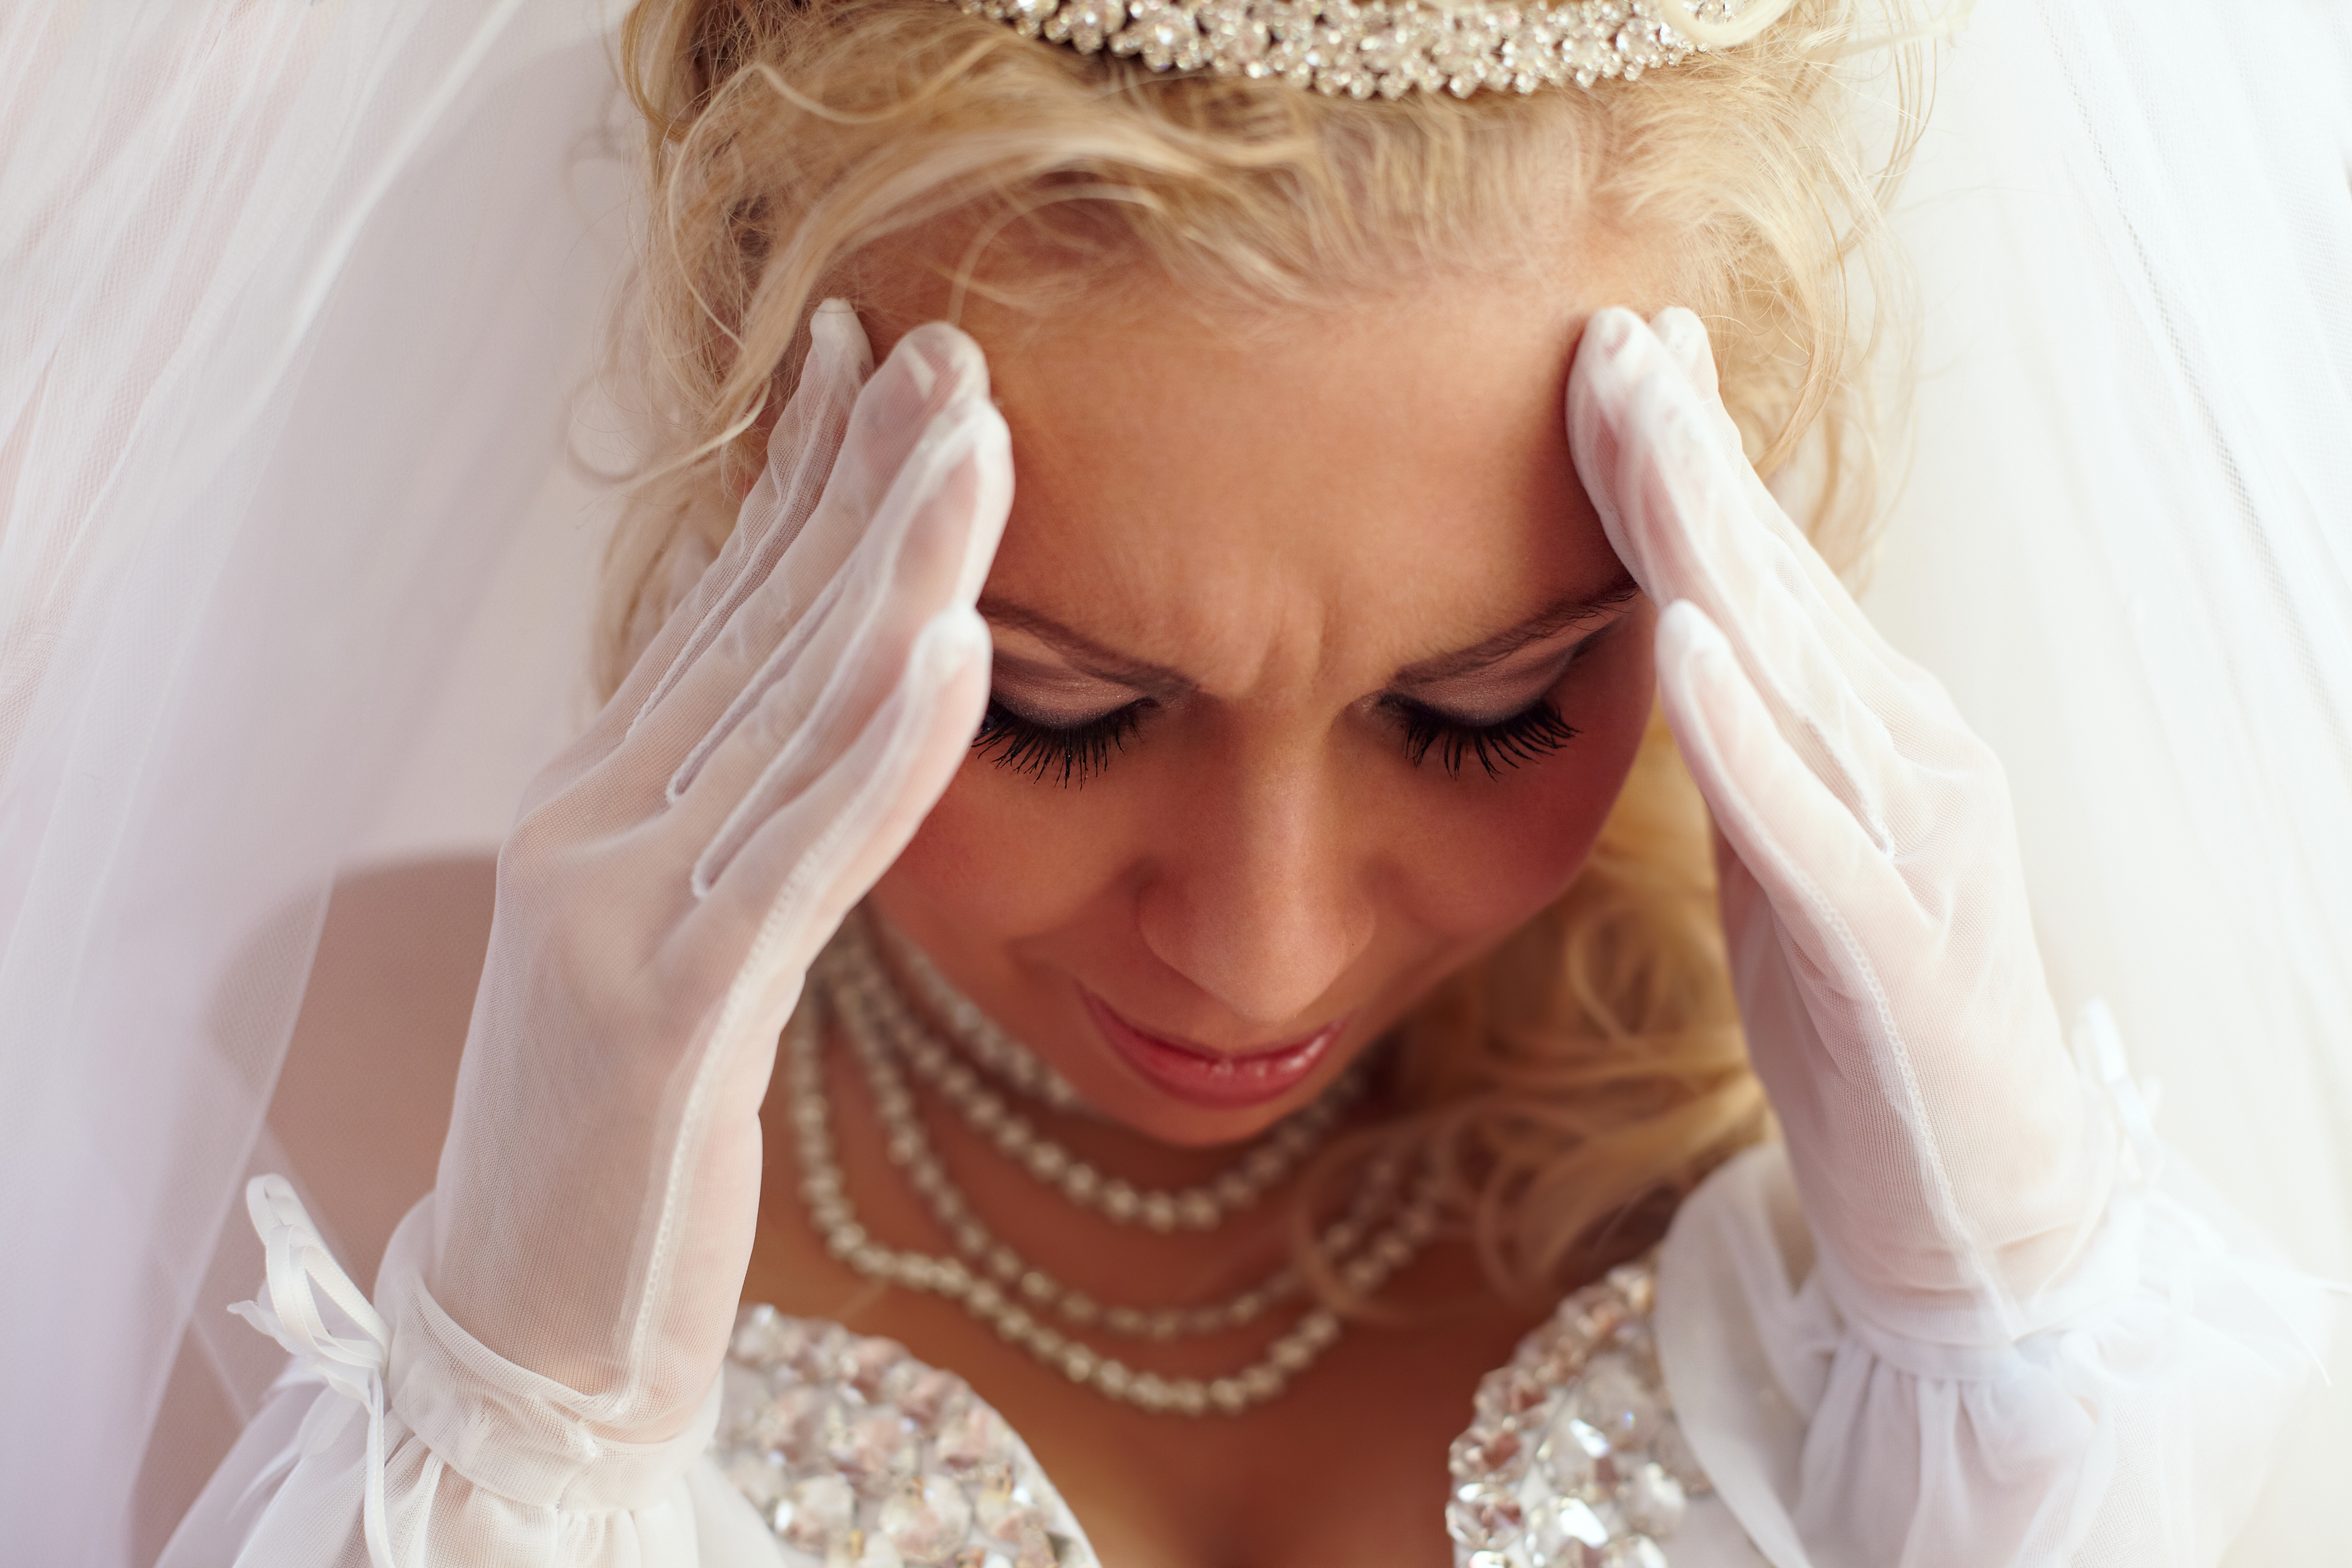 Une mariée stressée | Source : Shutterstock